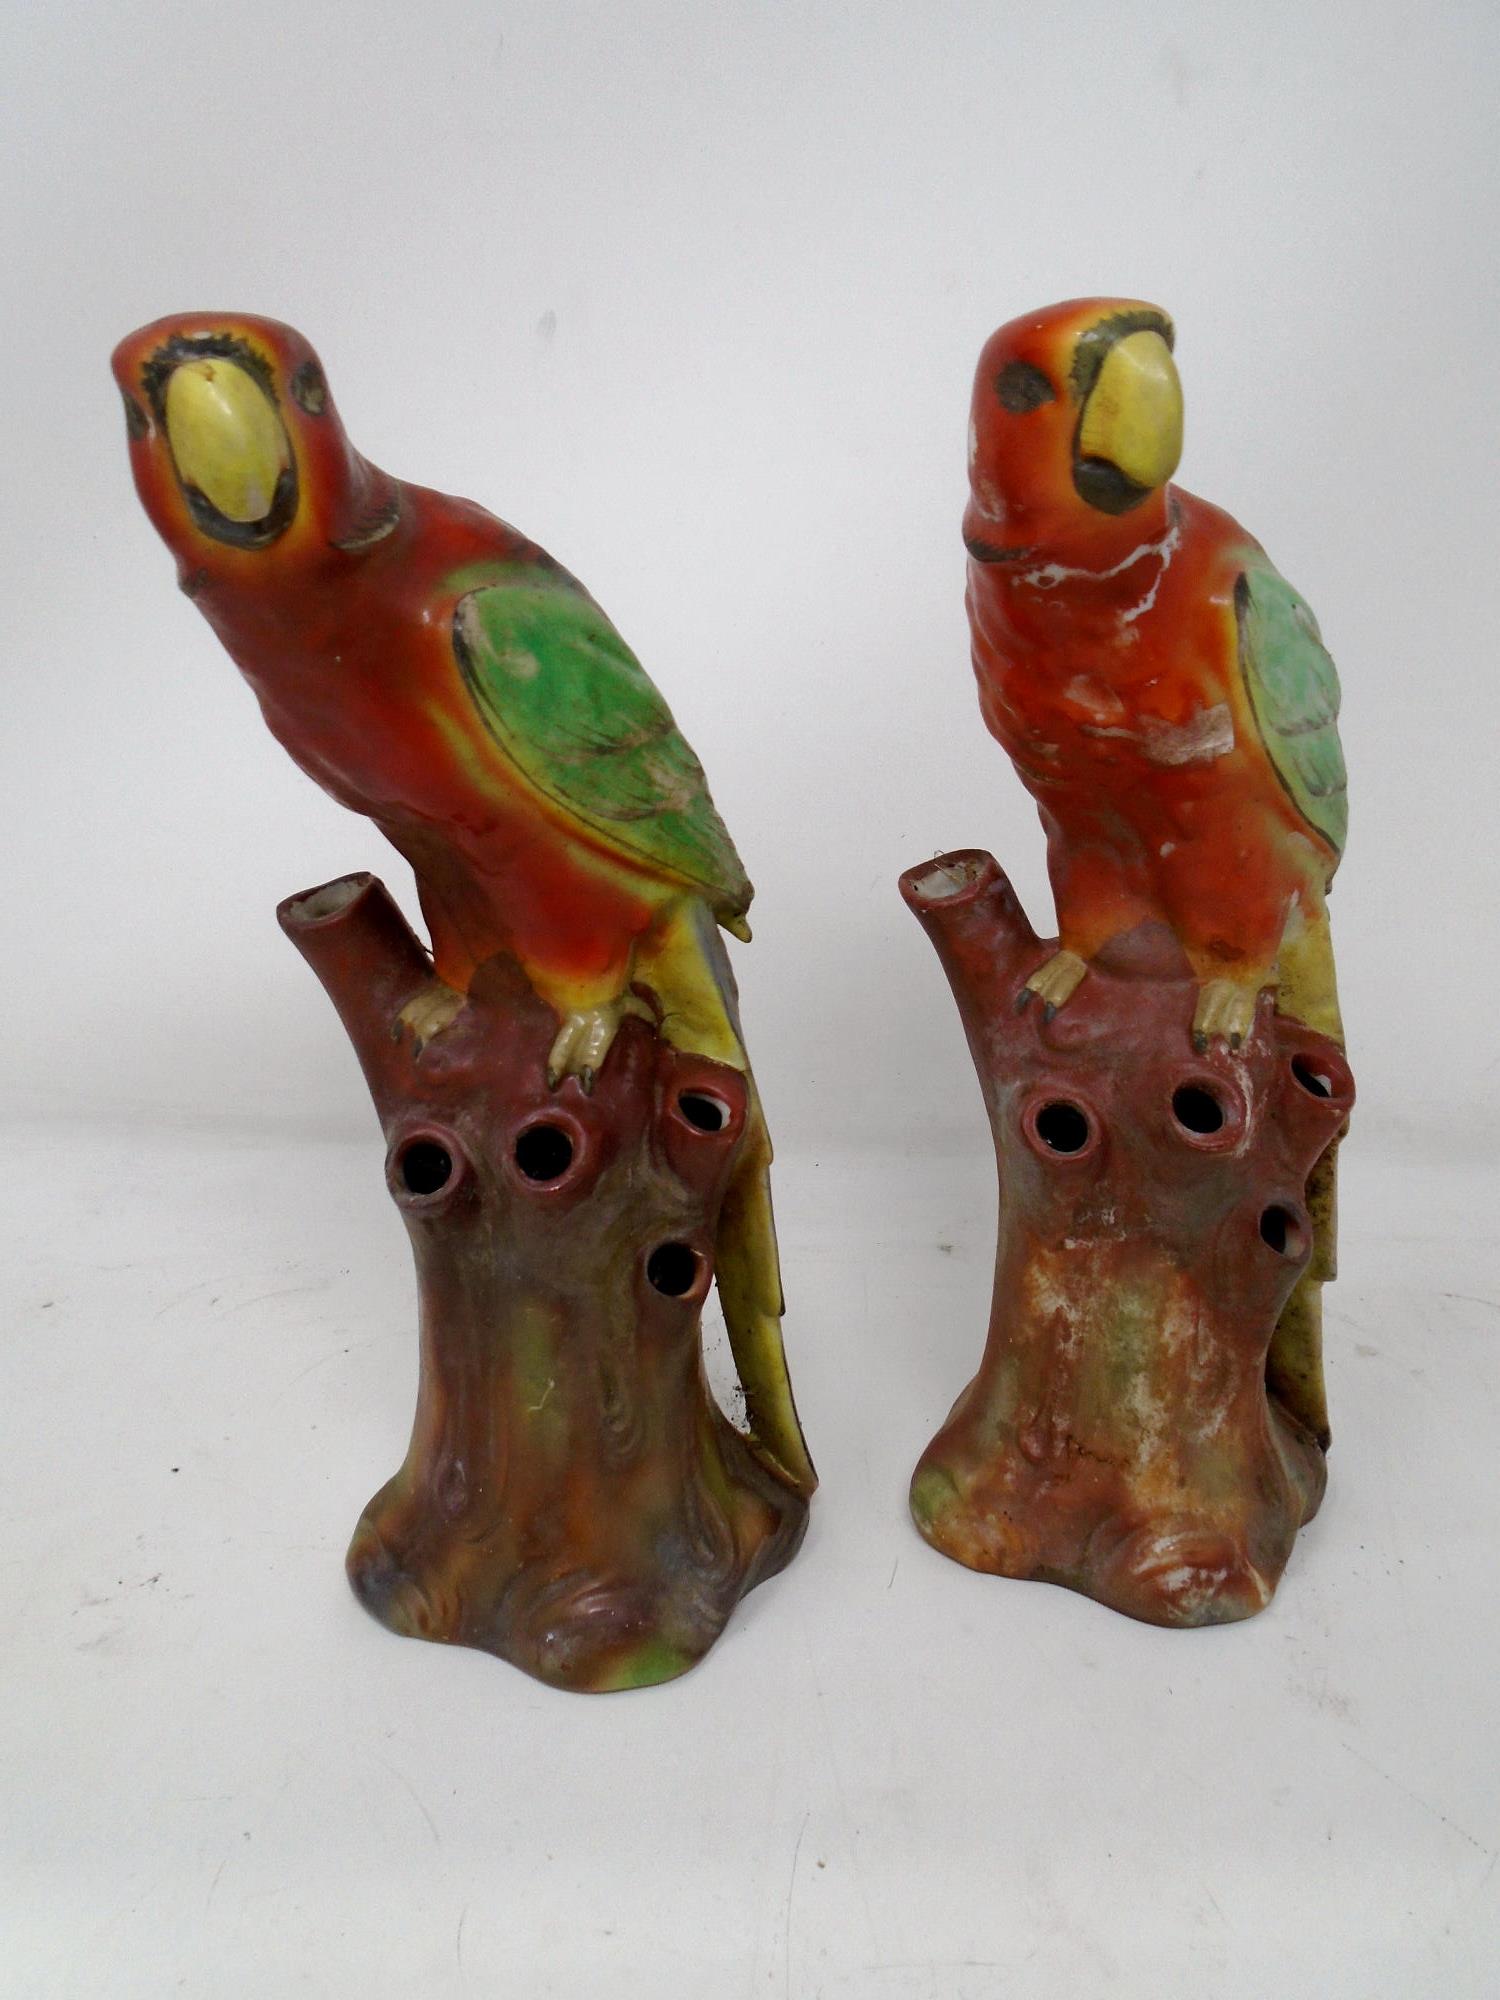 A pair of antique ceramic figures of parrots.